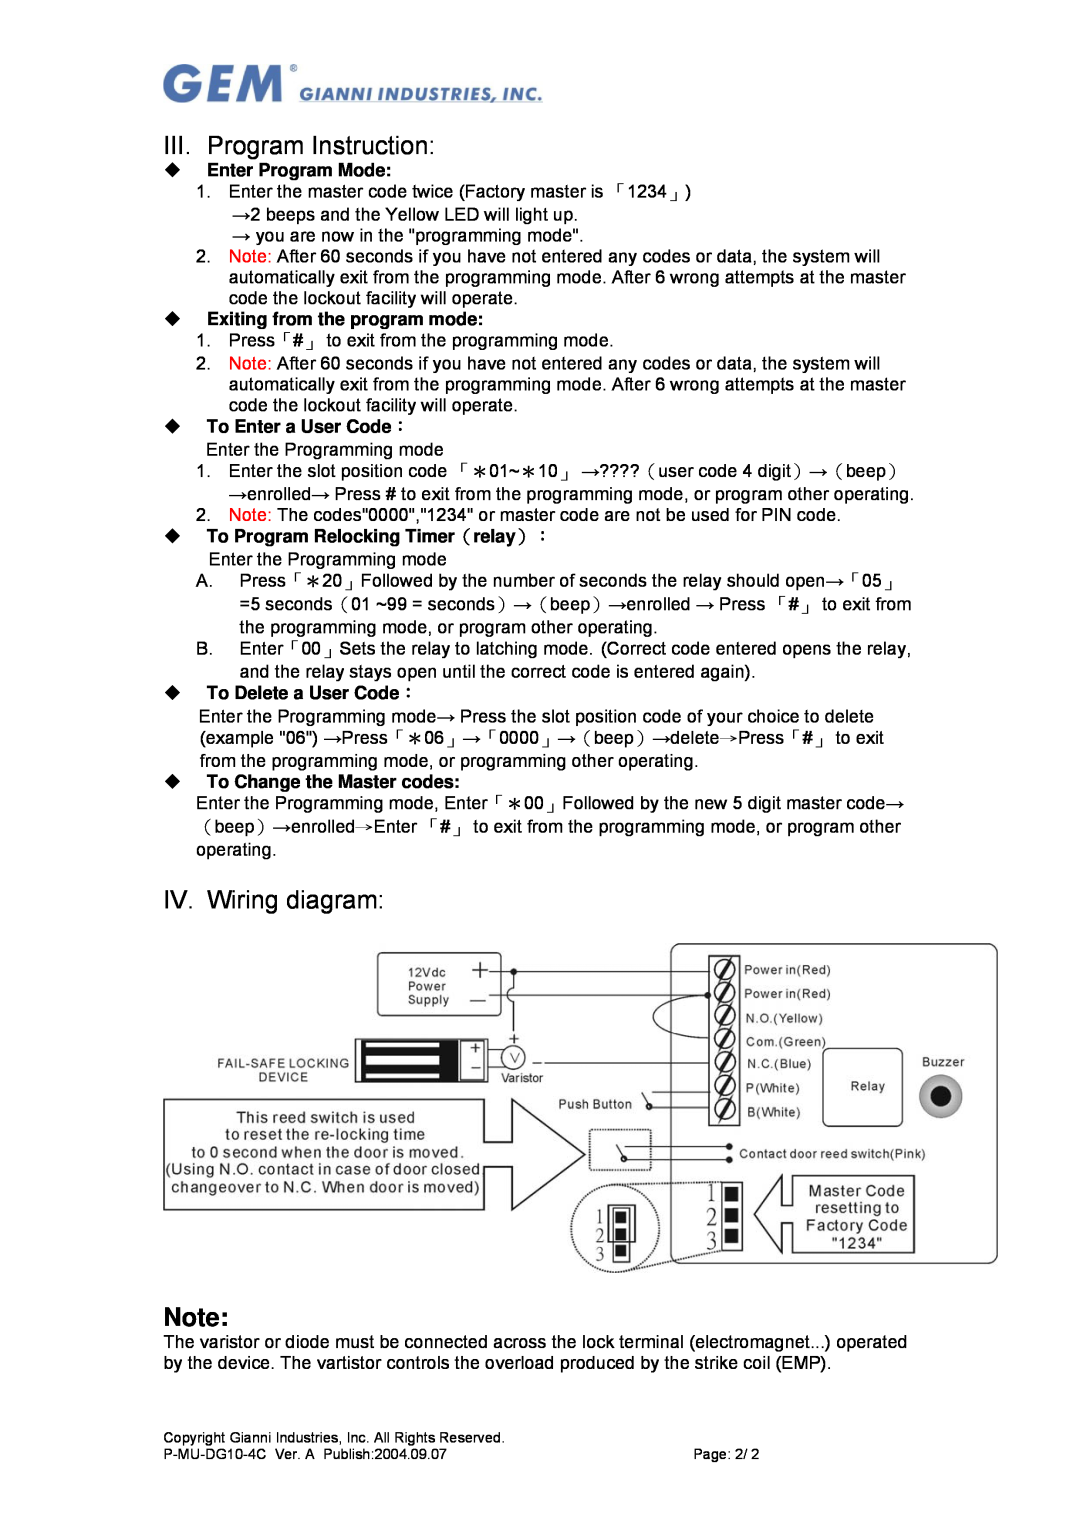 Gianni Industries DG-10 III. Program Instruction, IV. Wiring diagram, ‹ Enter Program Mode, ‹ To Delete a User Code： 